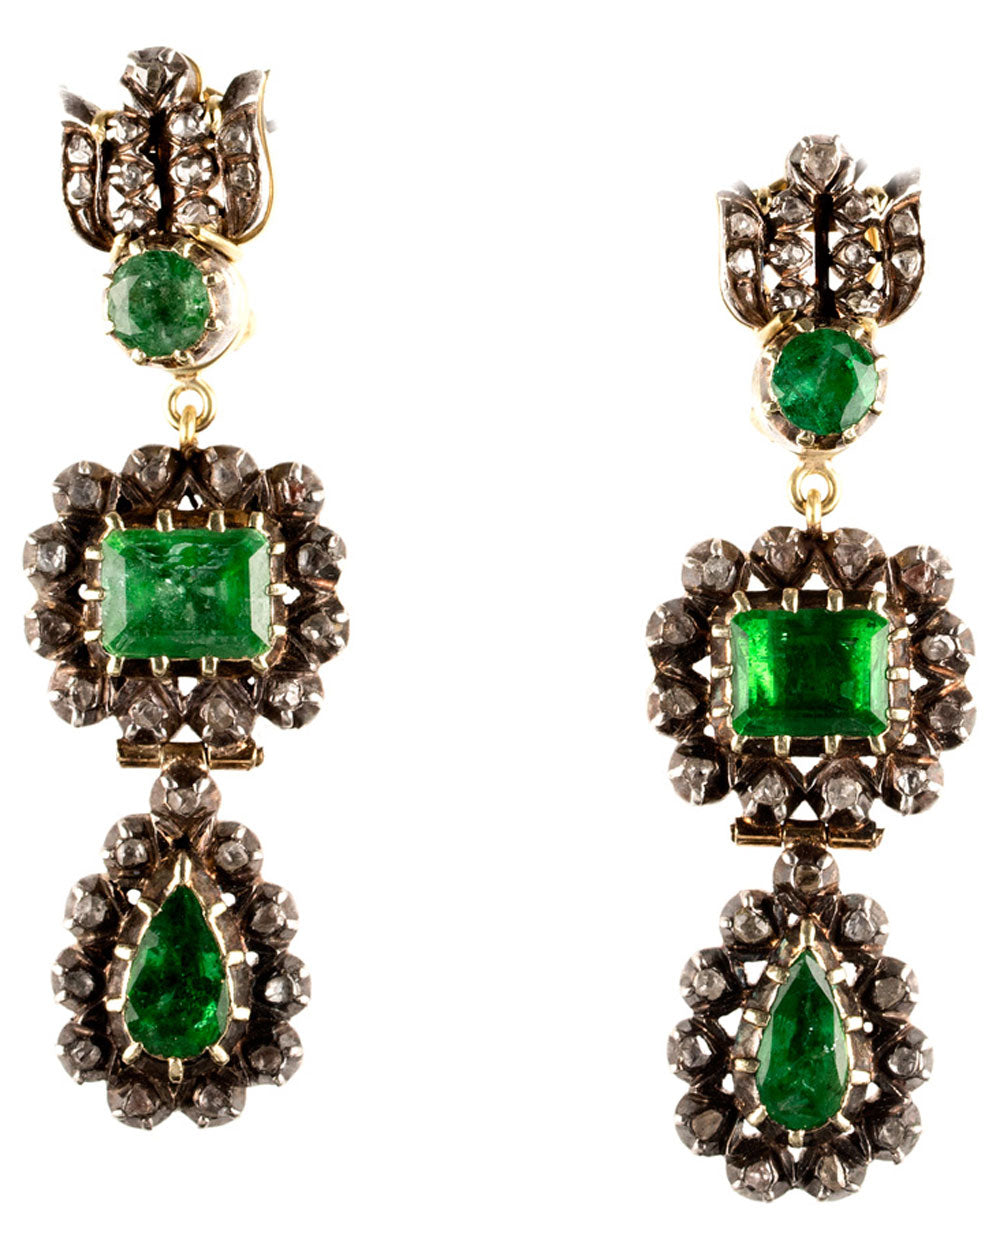 Georgian Emerald and Diamond Earrings